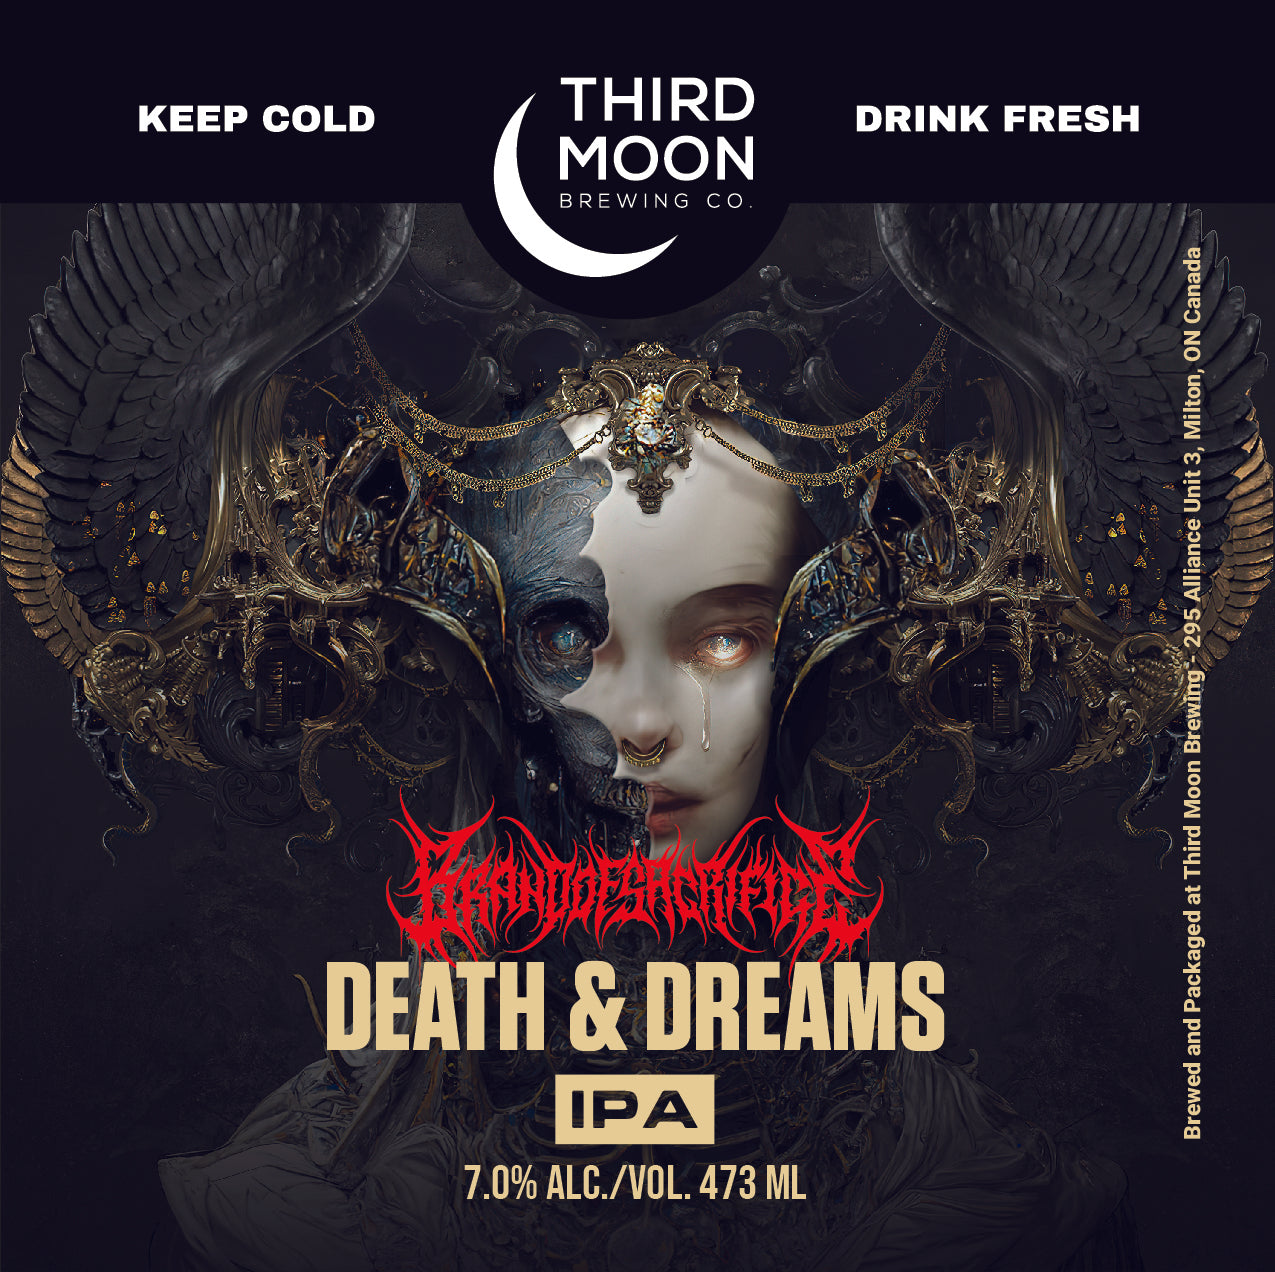 Hazy IPA - 4-pk of "Death & Dreams" tall cans